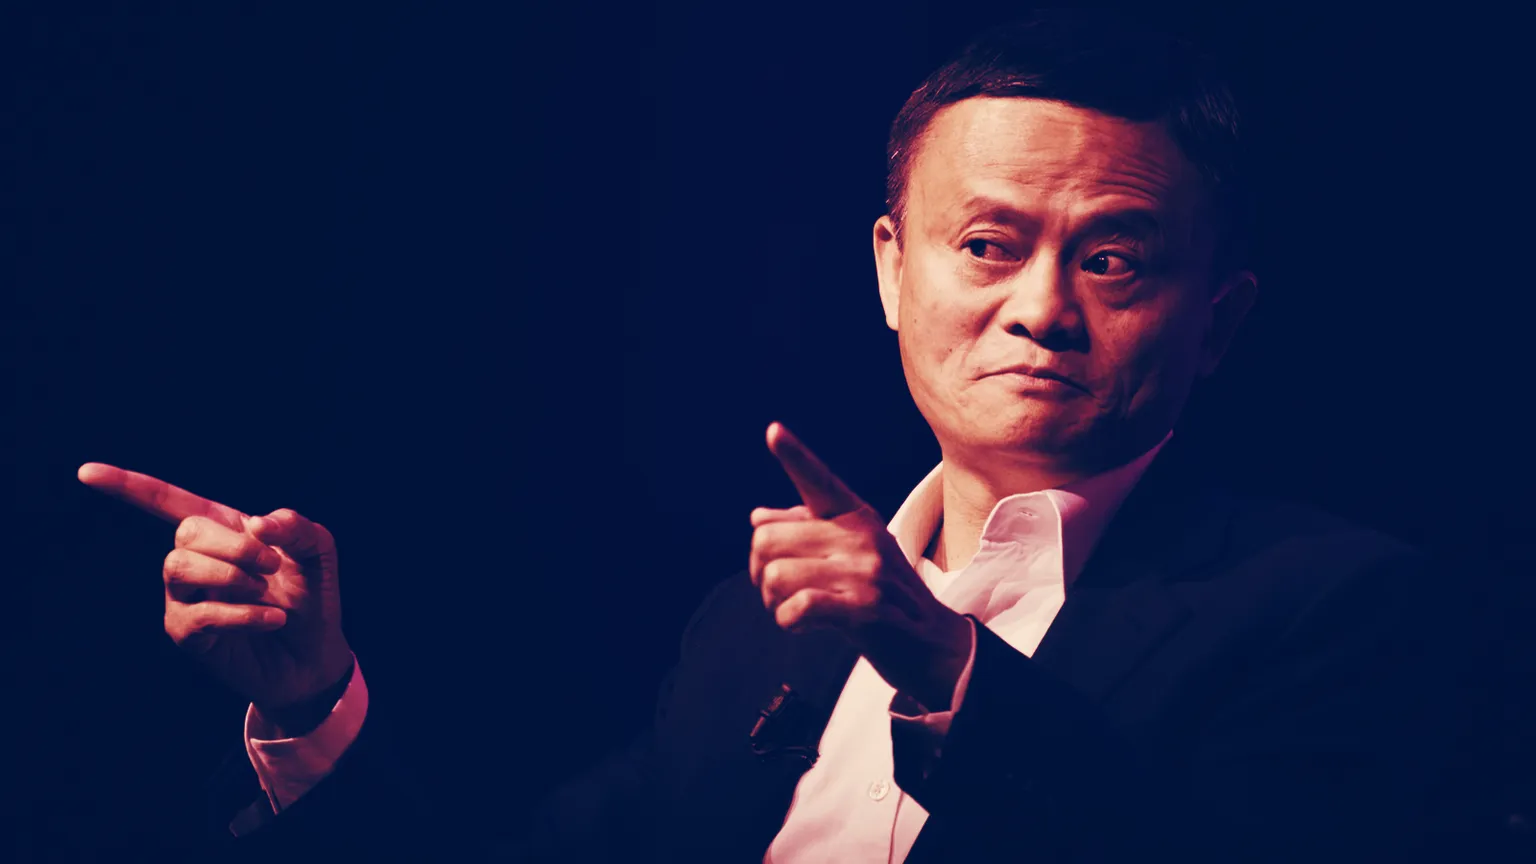 Jack Ma founded Alibaba. Image: Shutterstock